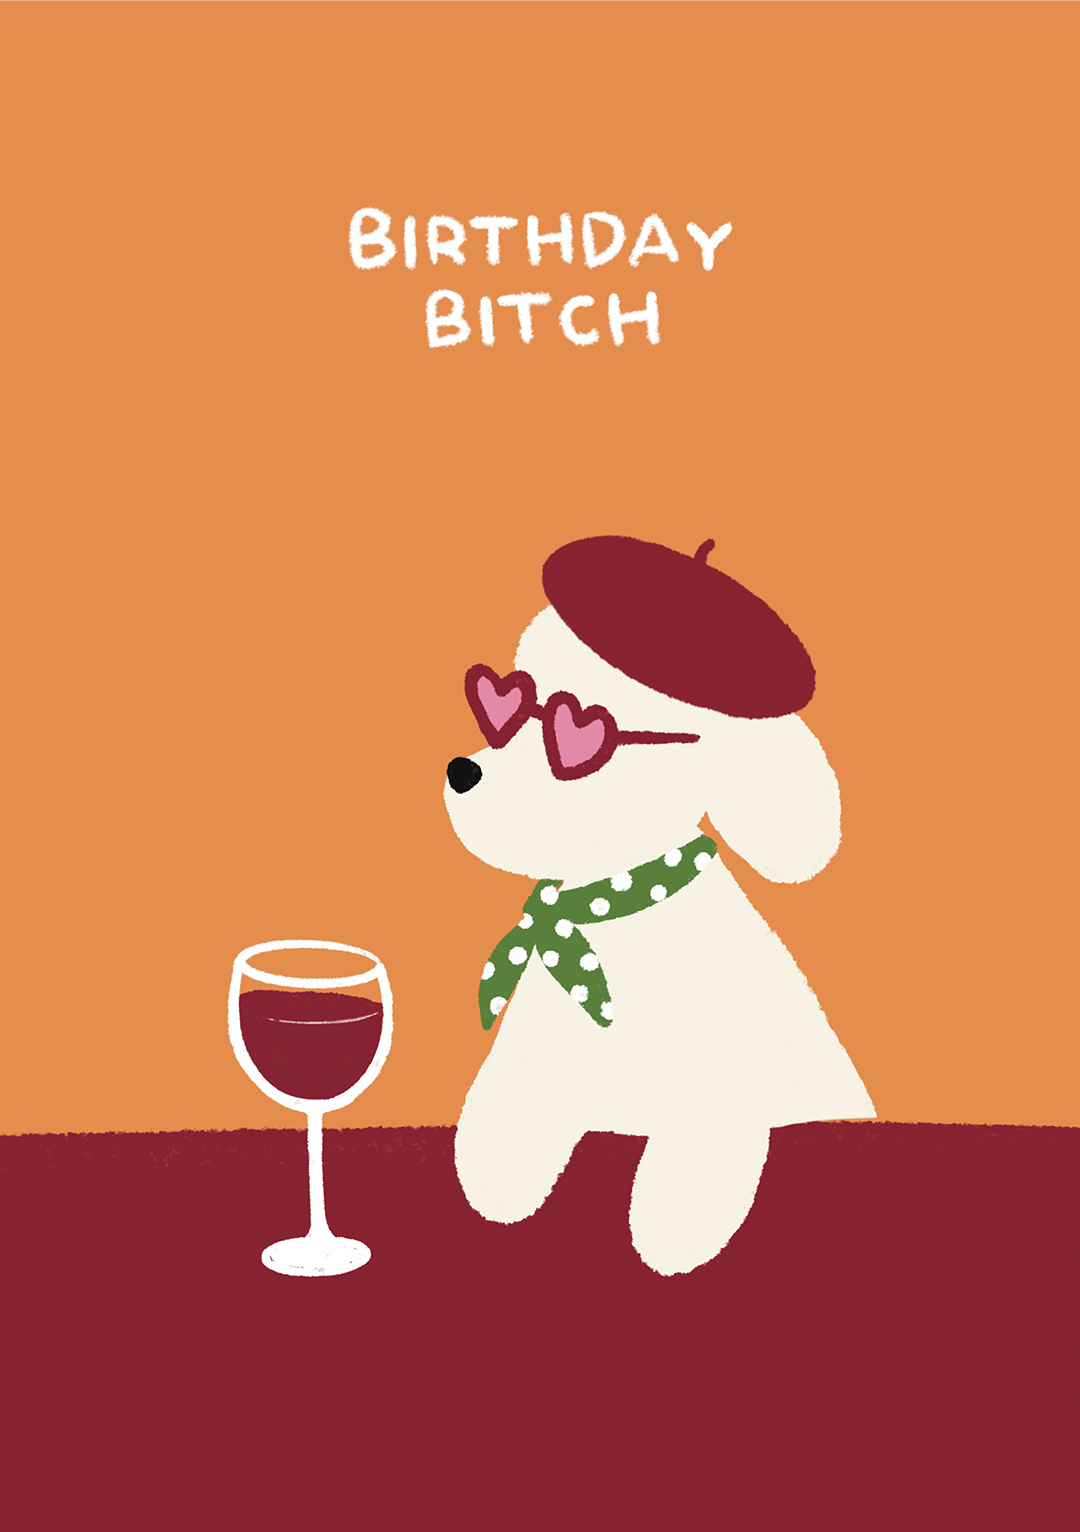 birthday b**ch card